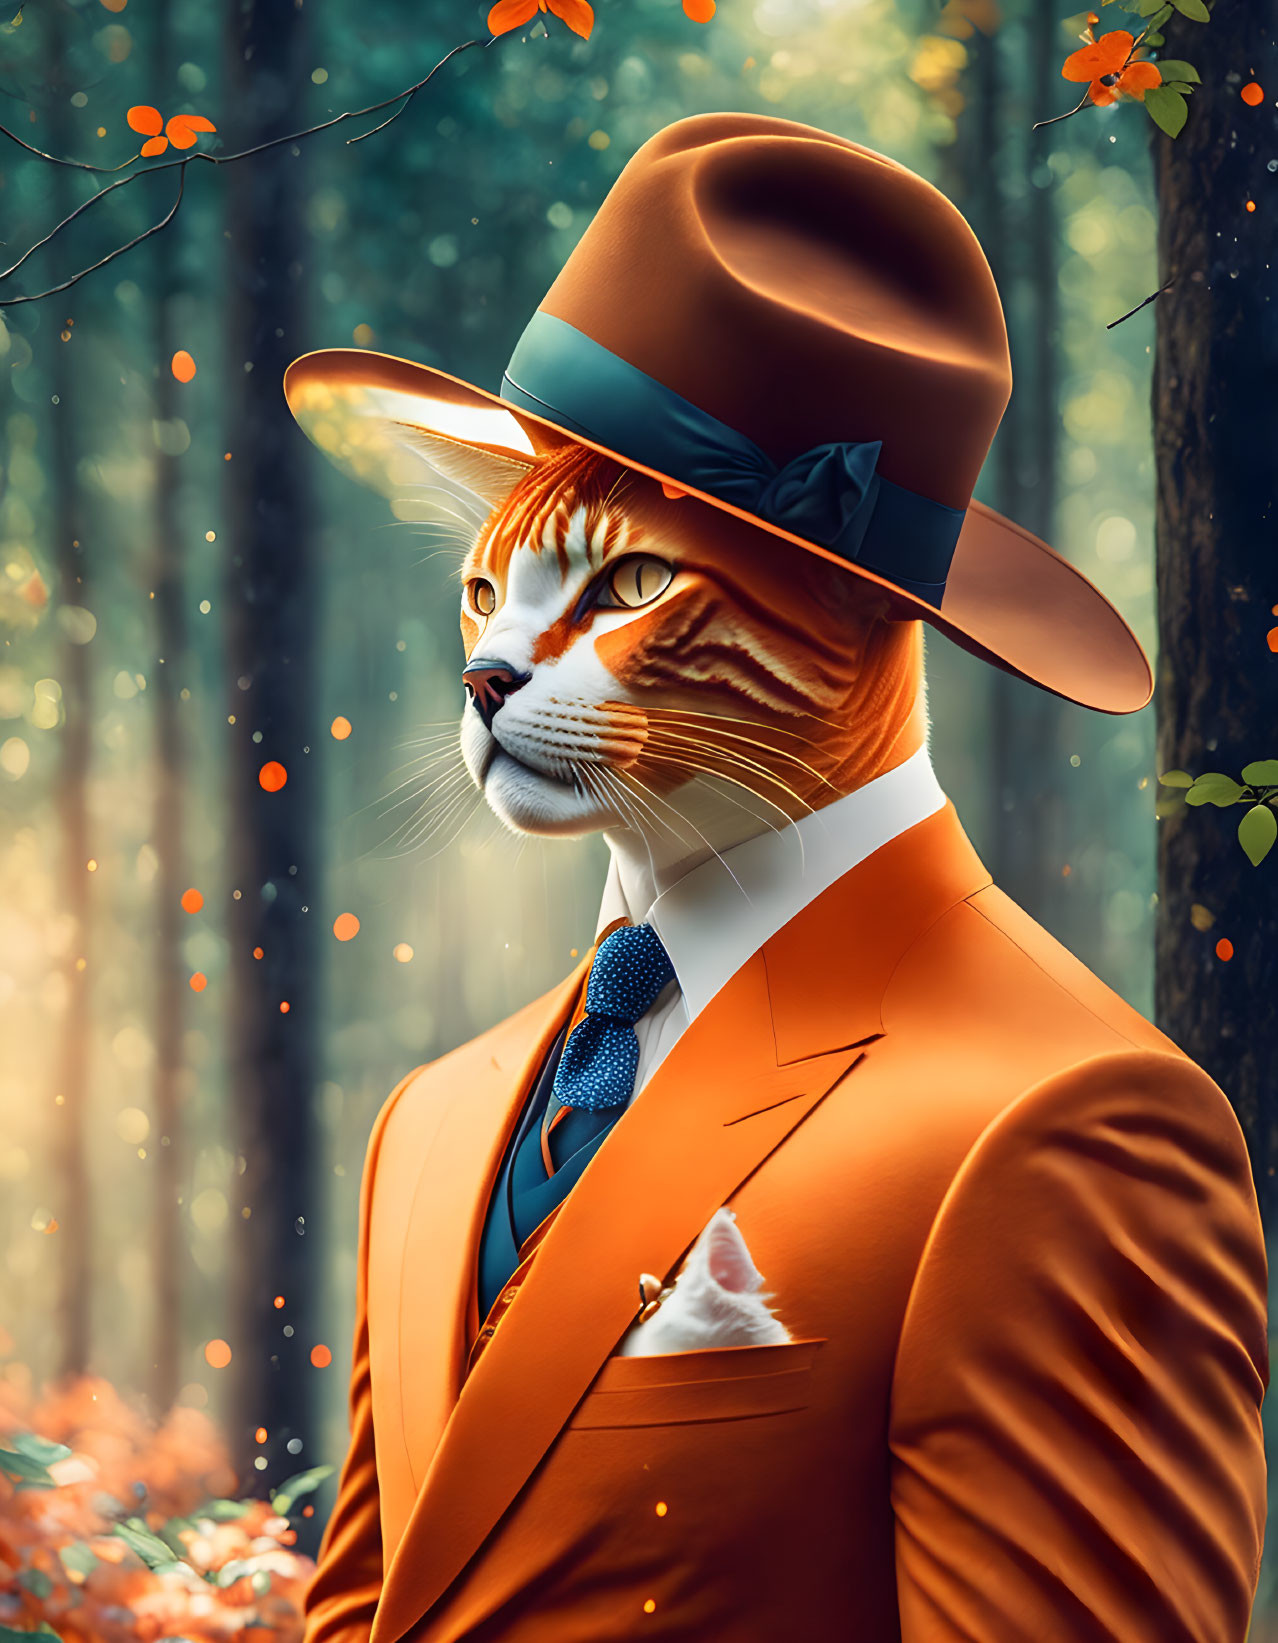 Orange Tabby Cat completely dressed as a gentleman